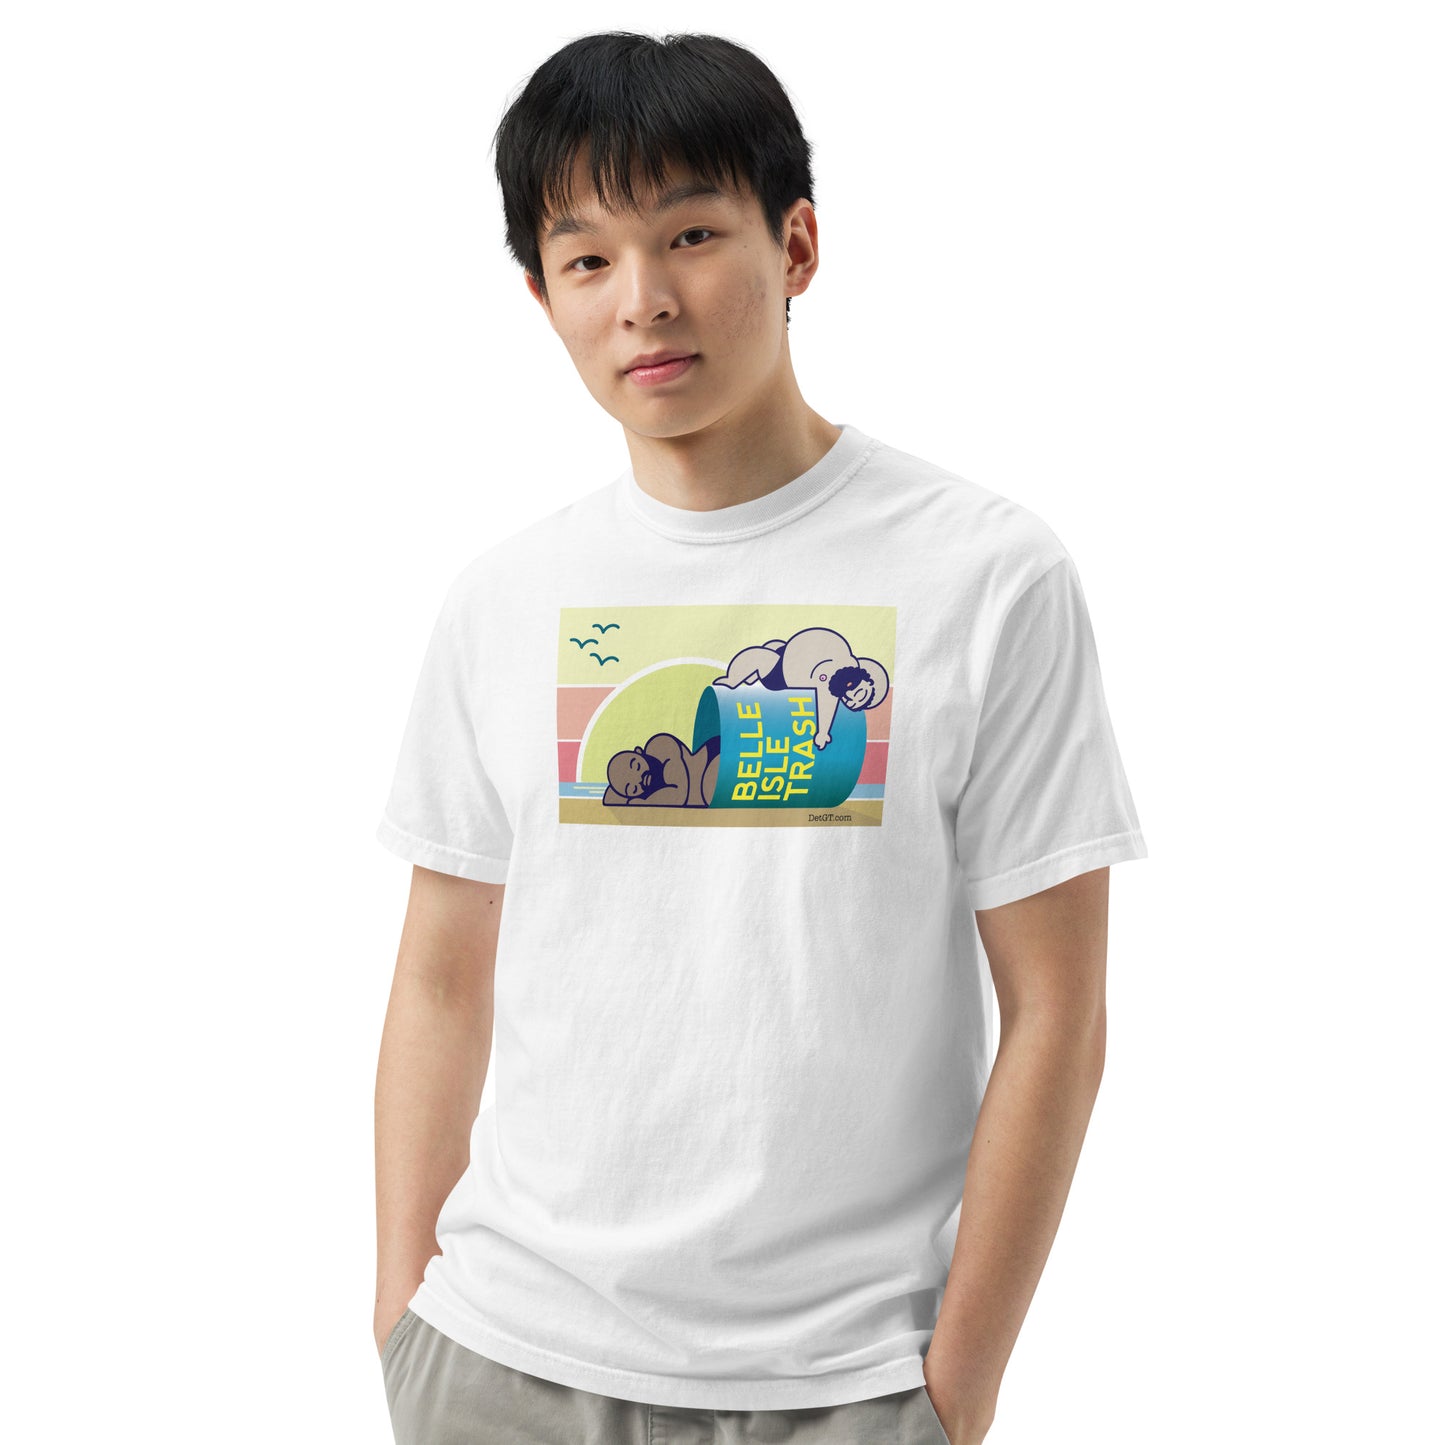 Belle Isle Trash Men’s garment-dyed heavyweight t-shirt